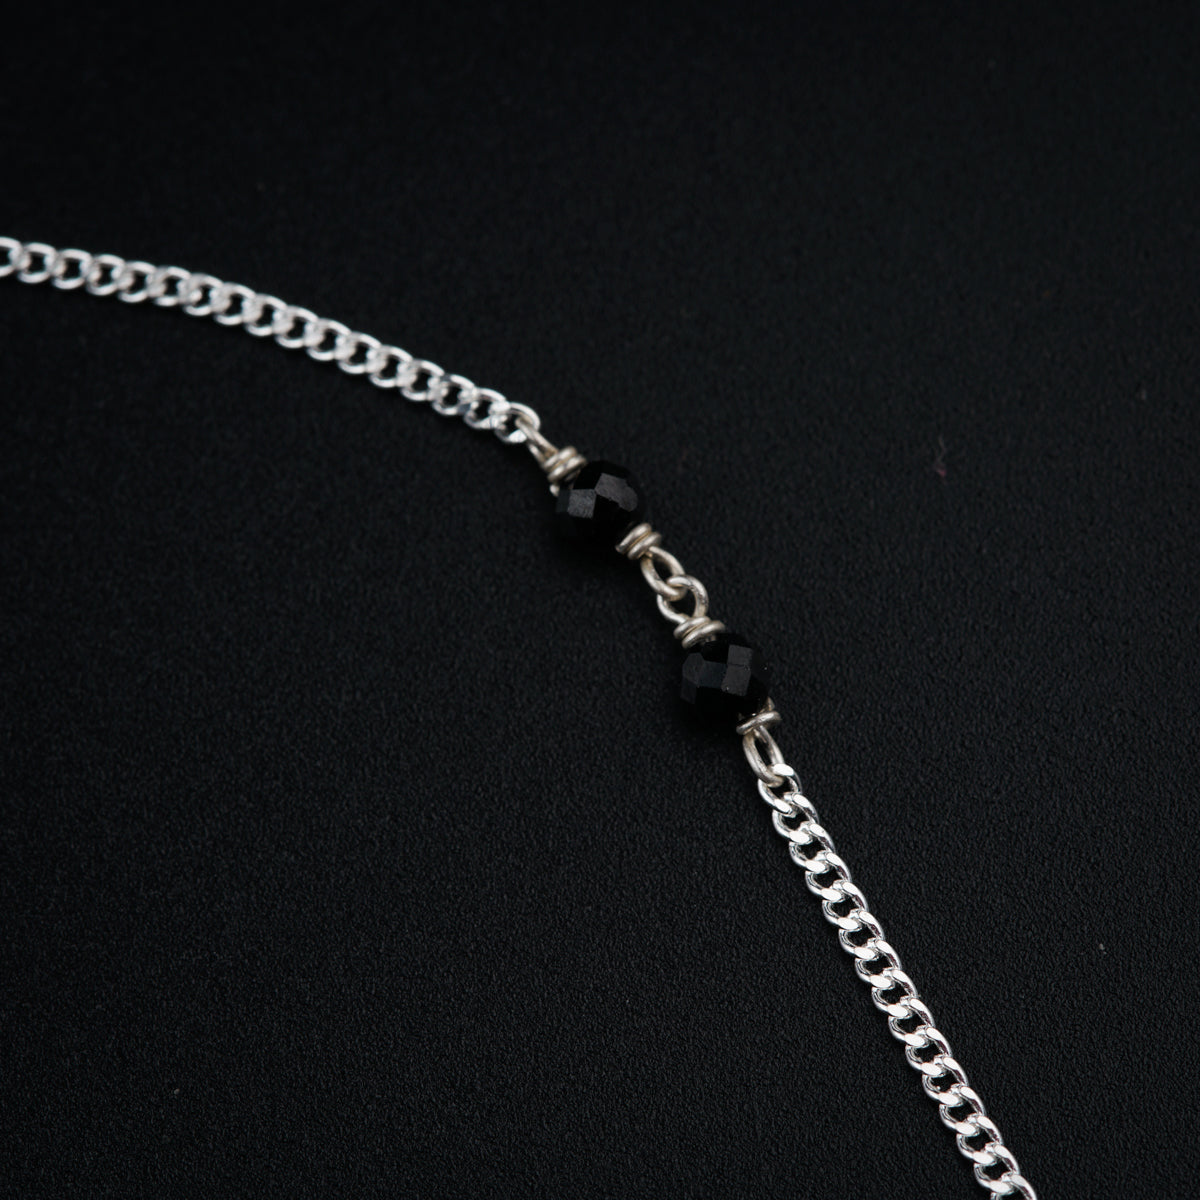 Handmade Silver Mangalsutra Bracelet with Black Spinel